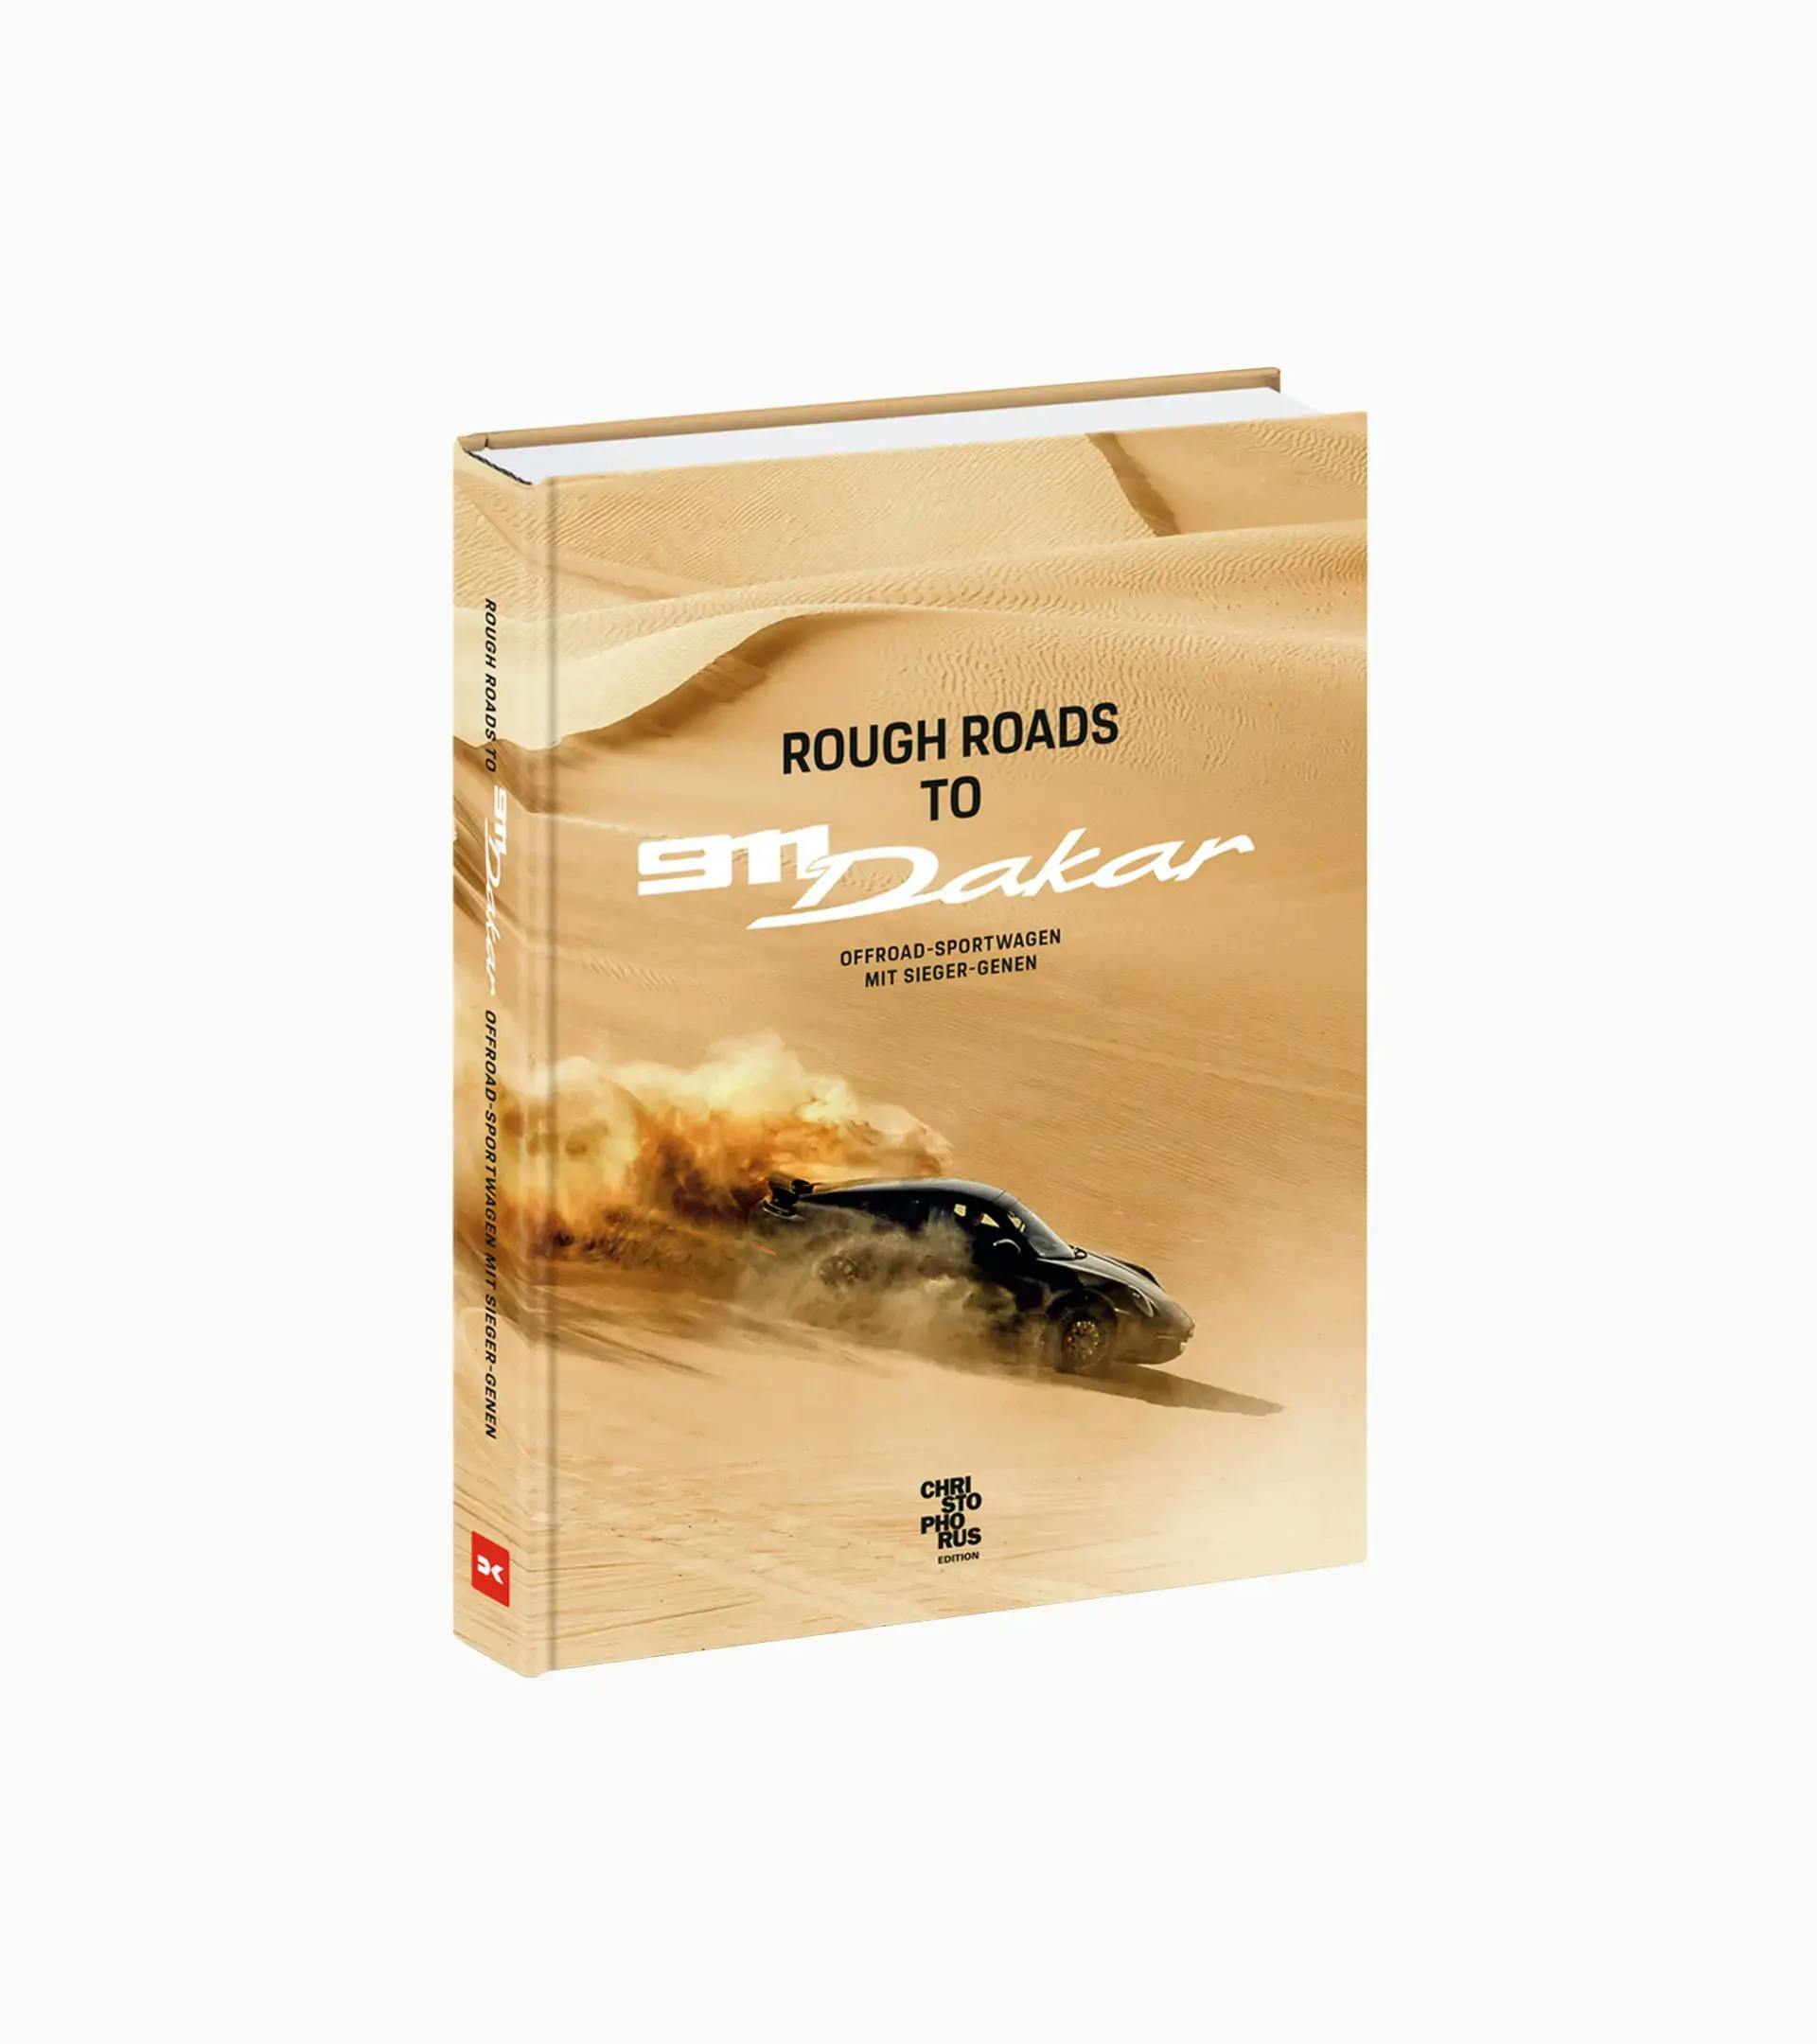 Libro 'Rough Roads to 911 Dakar'